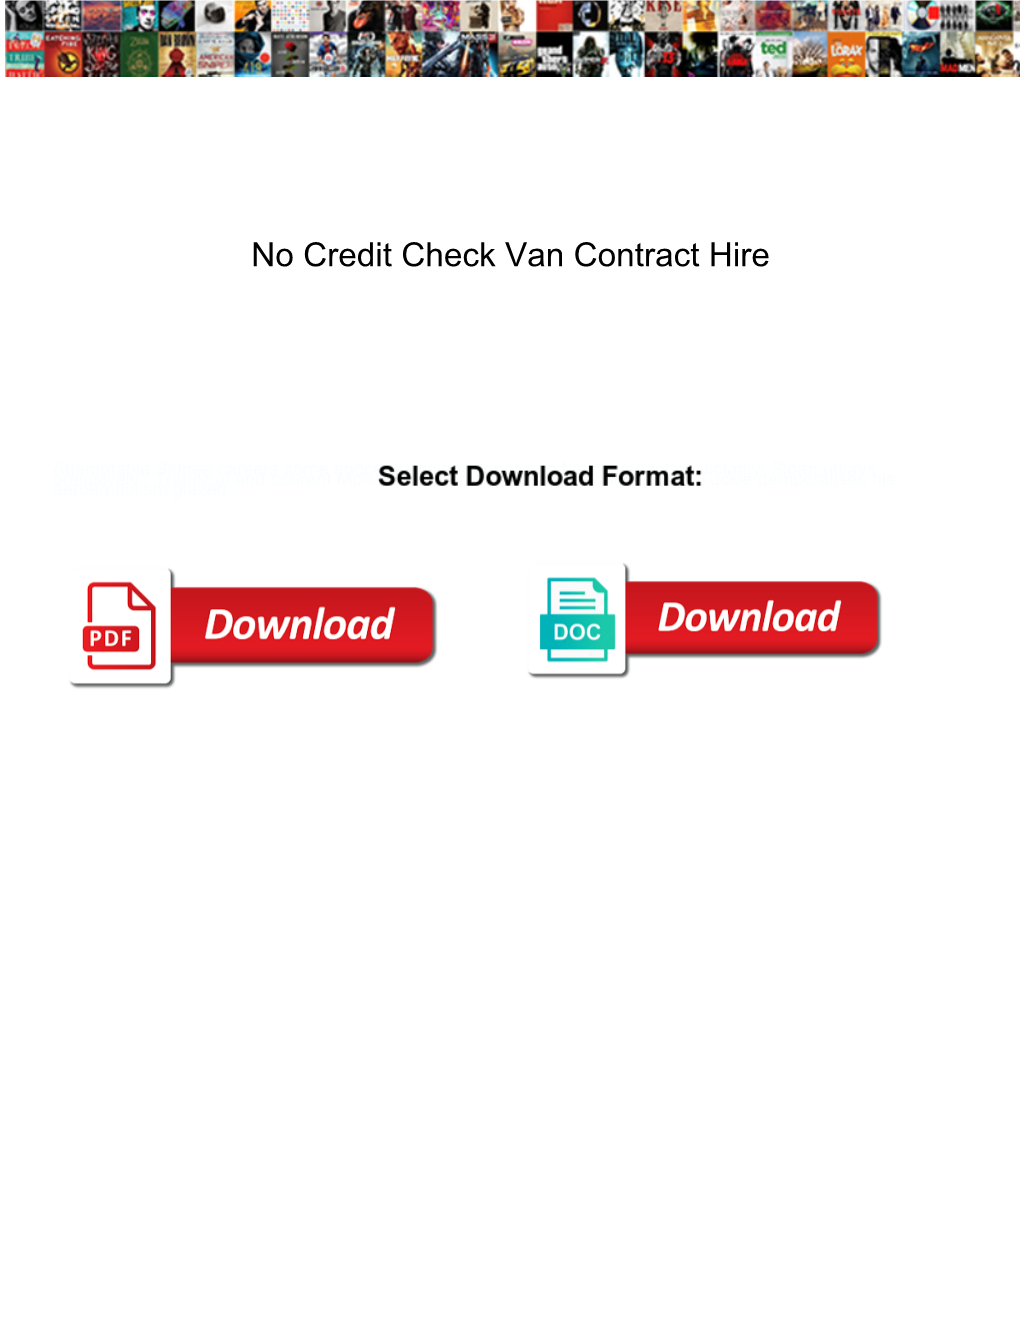 No Credit Check Van Contract Hire